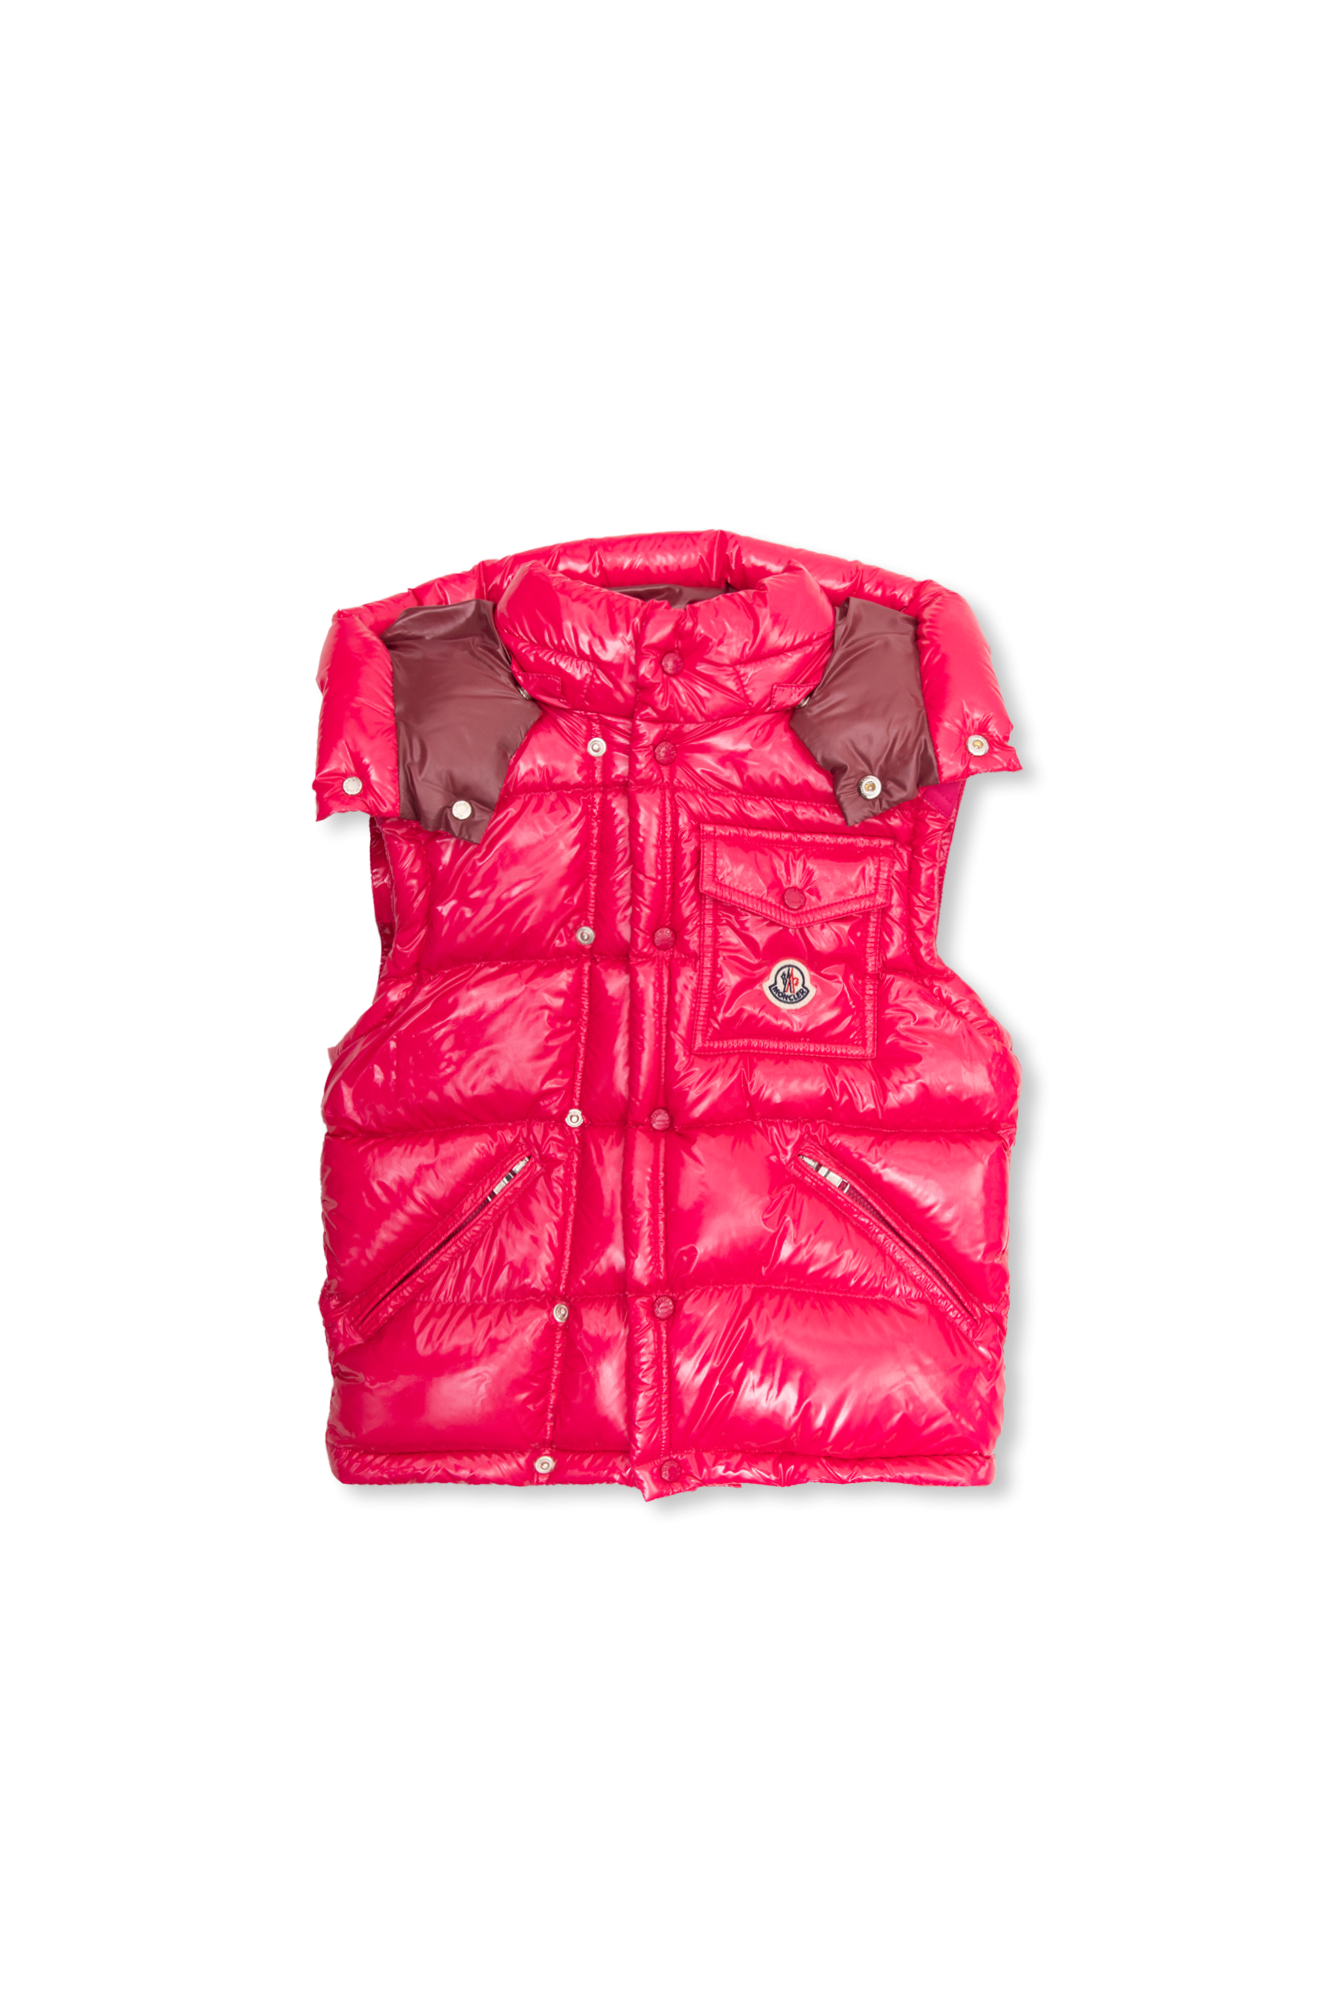 Moncler Enfant Kids Pink Karakorum Down Jacket